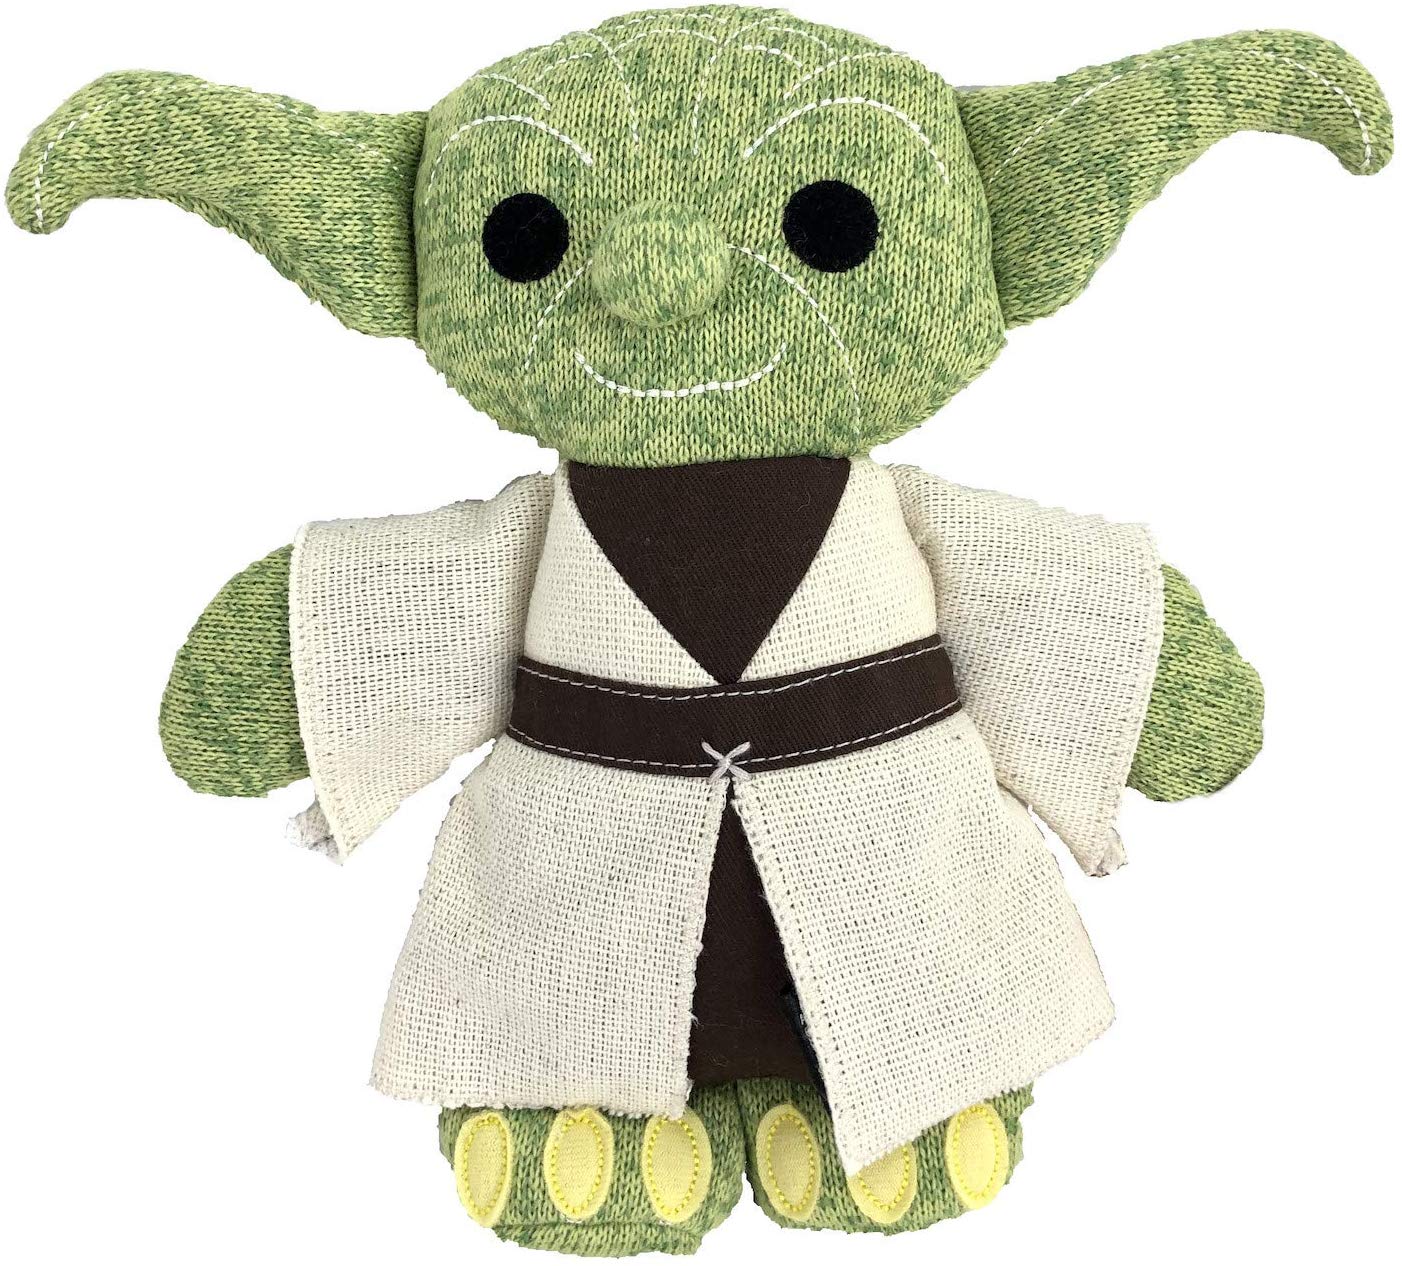 Disney Parks Star Wars Galaxy's Edge Yoda Plush New with Tag - image 3 of 3